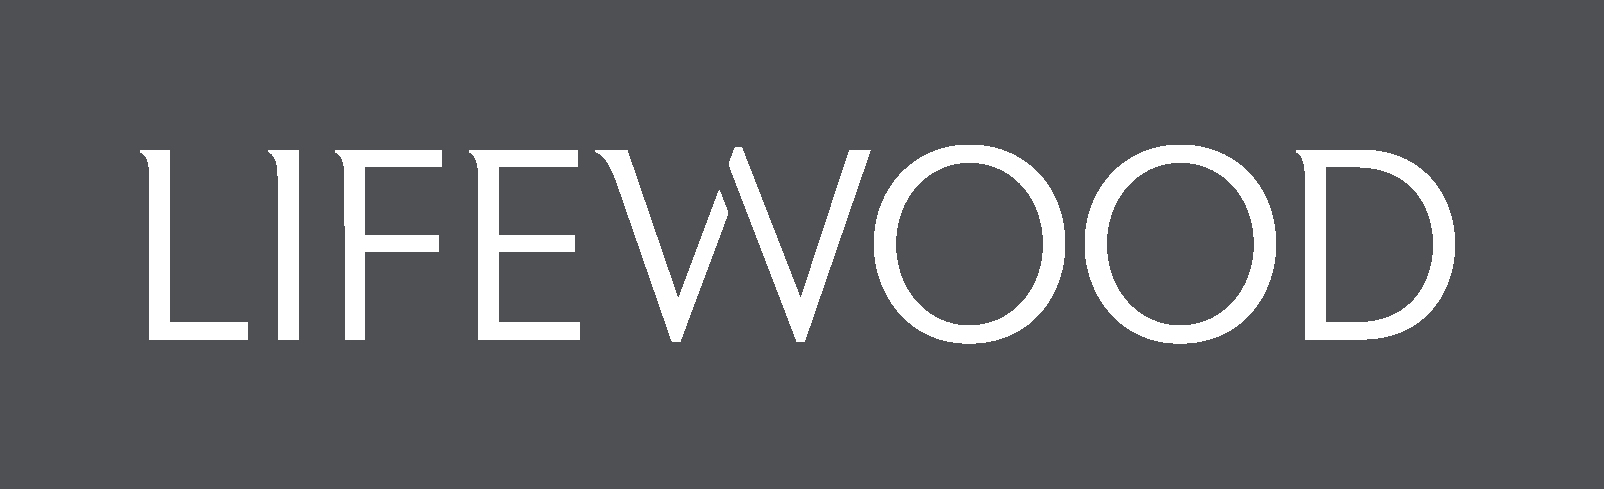 Lifewood Logo